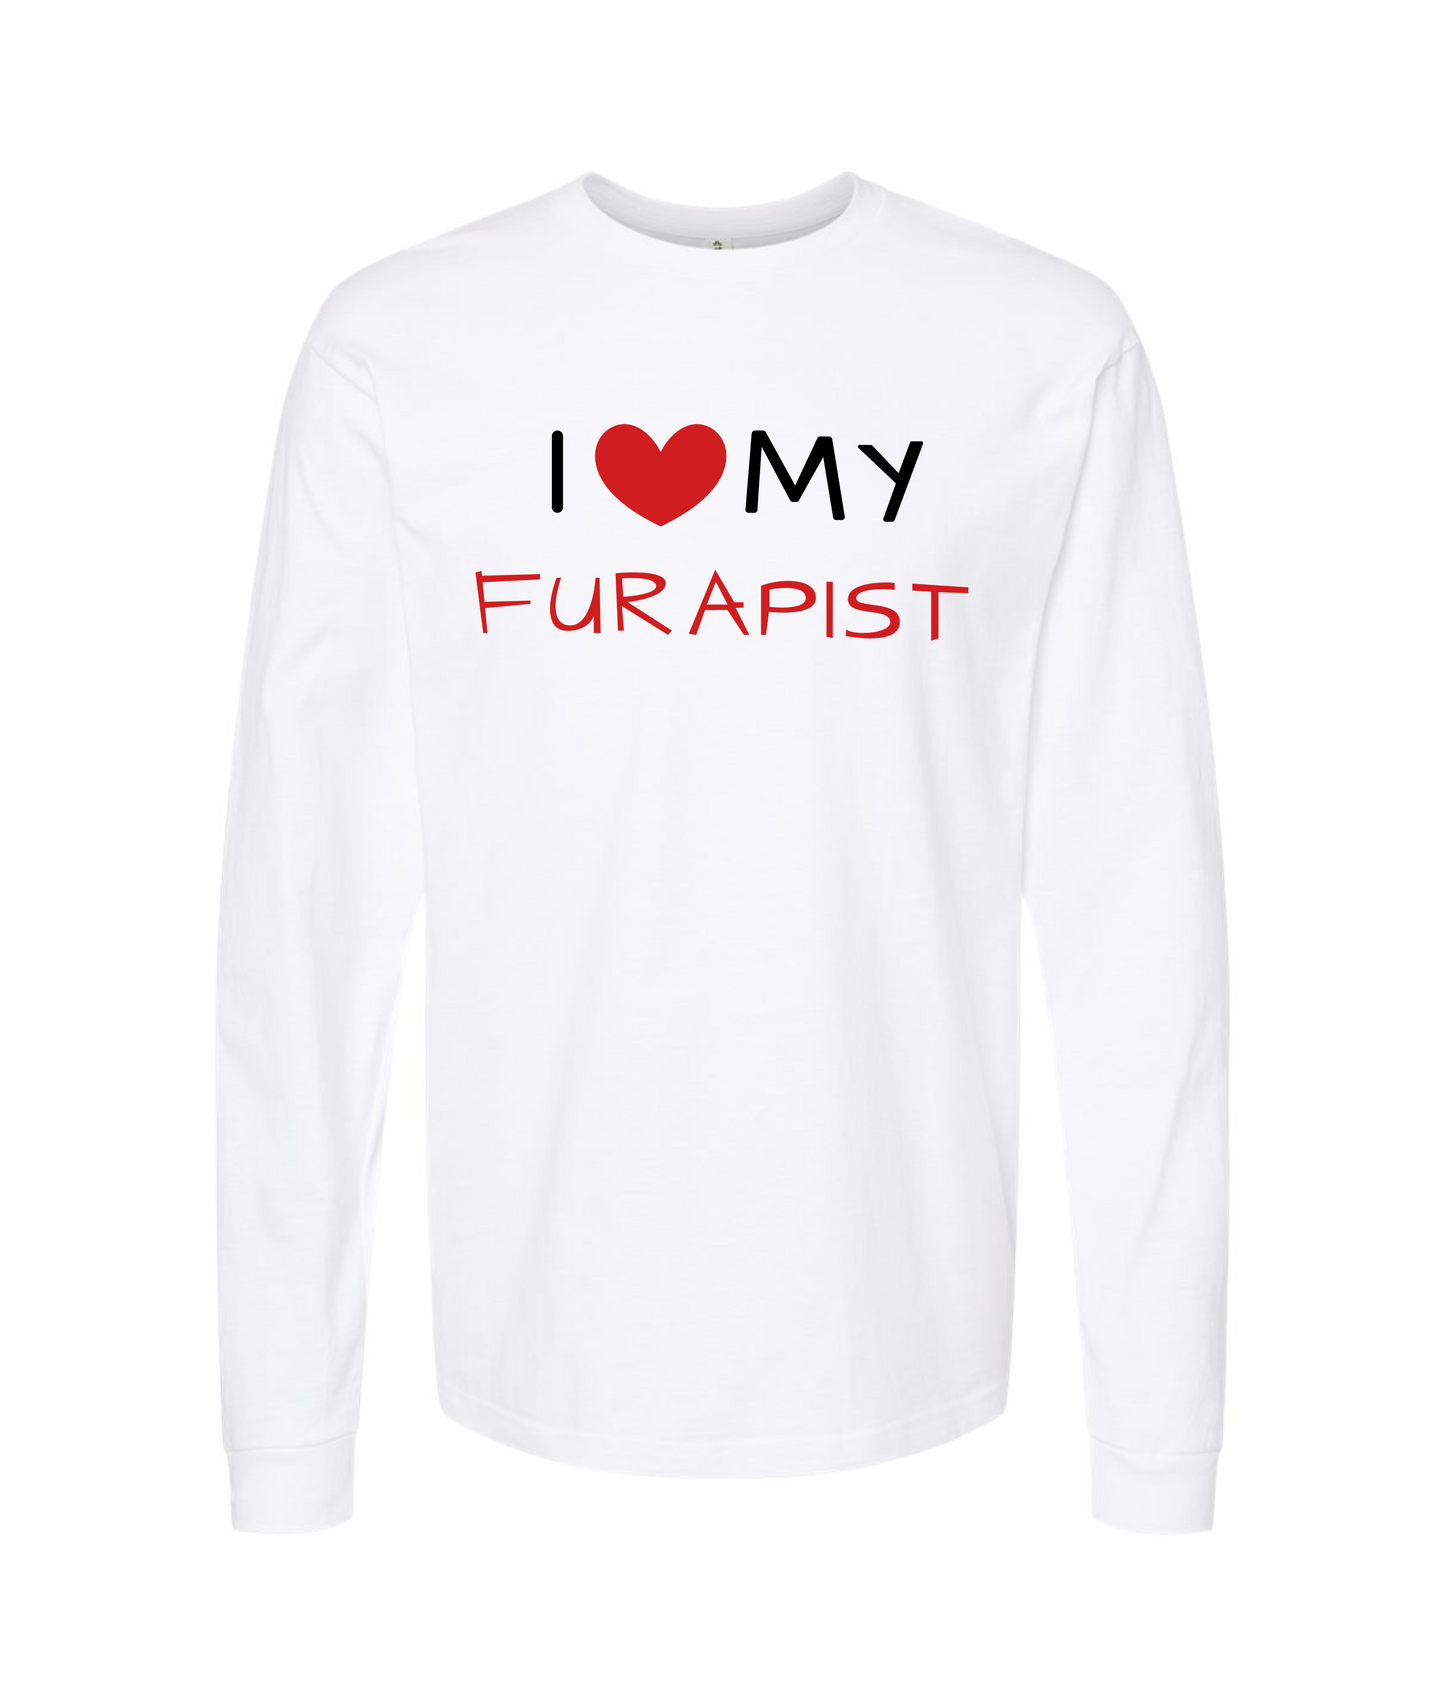 pyschofurapy.com - I <3 MY FURAPIST - White Long Sleeve T